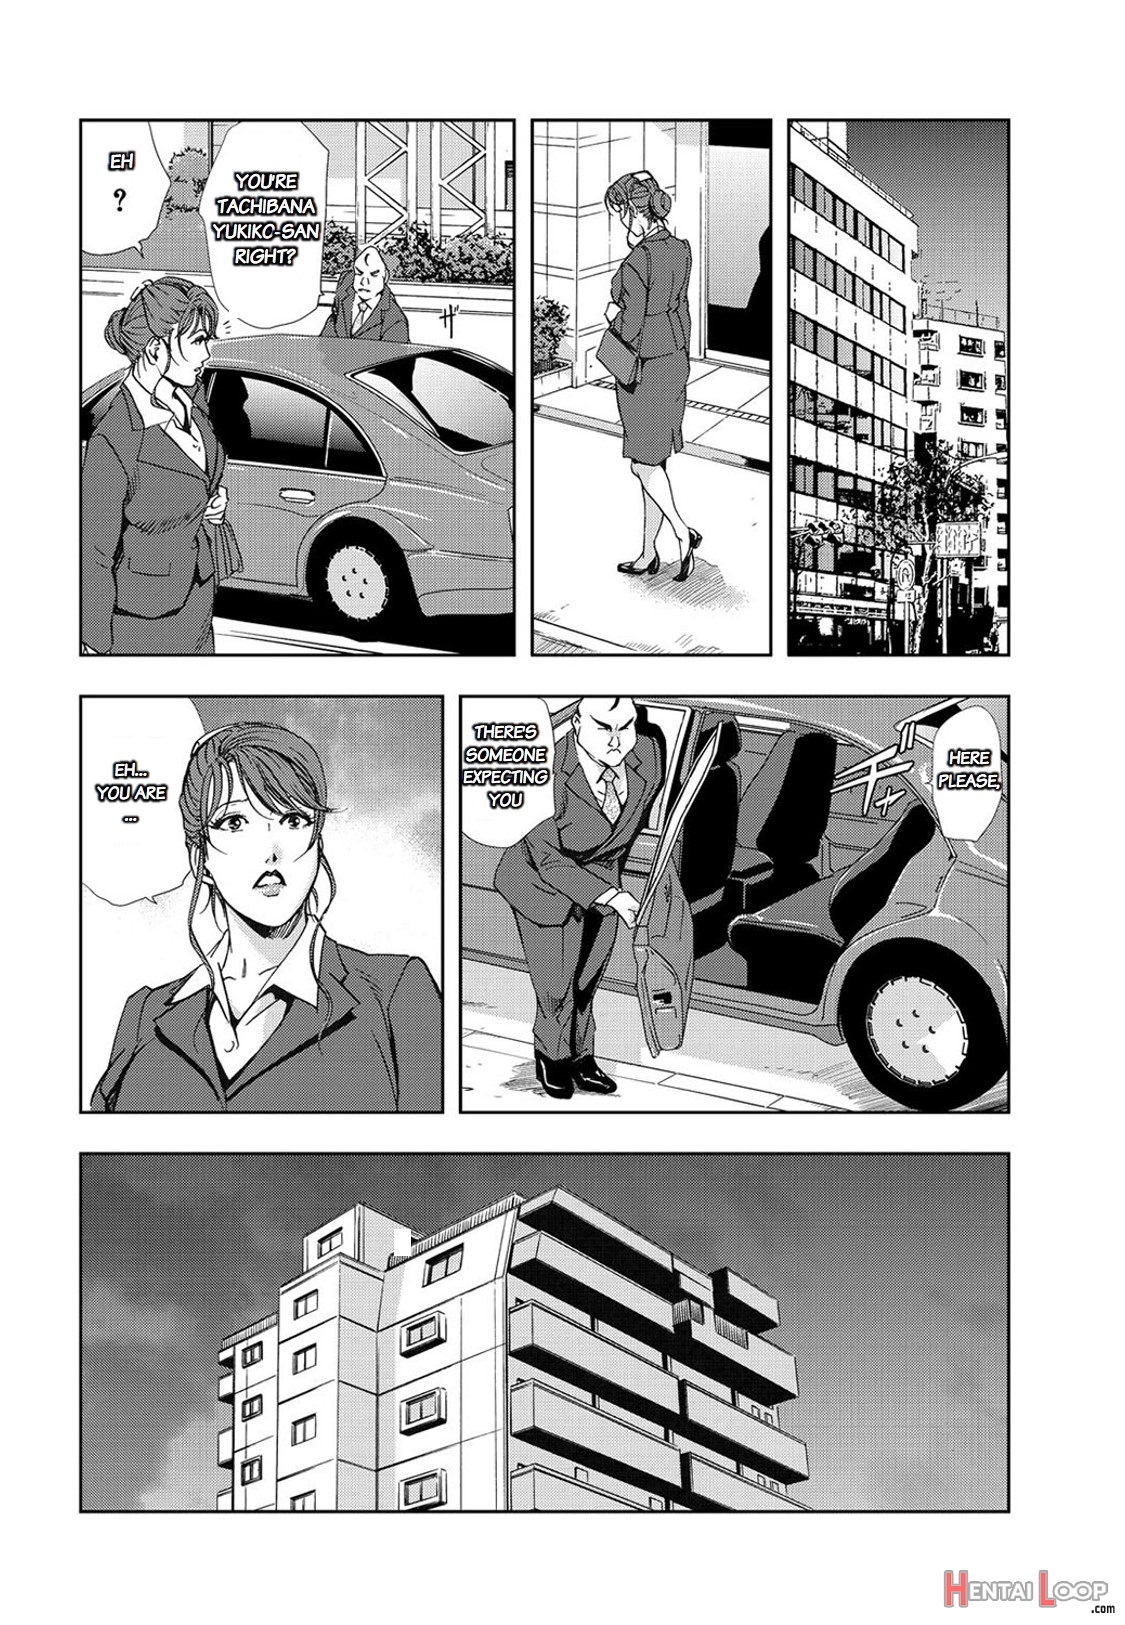 Nikuhisyo Yukiko Chapter 25-2 page 10